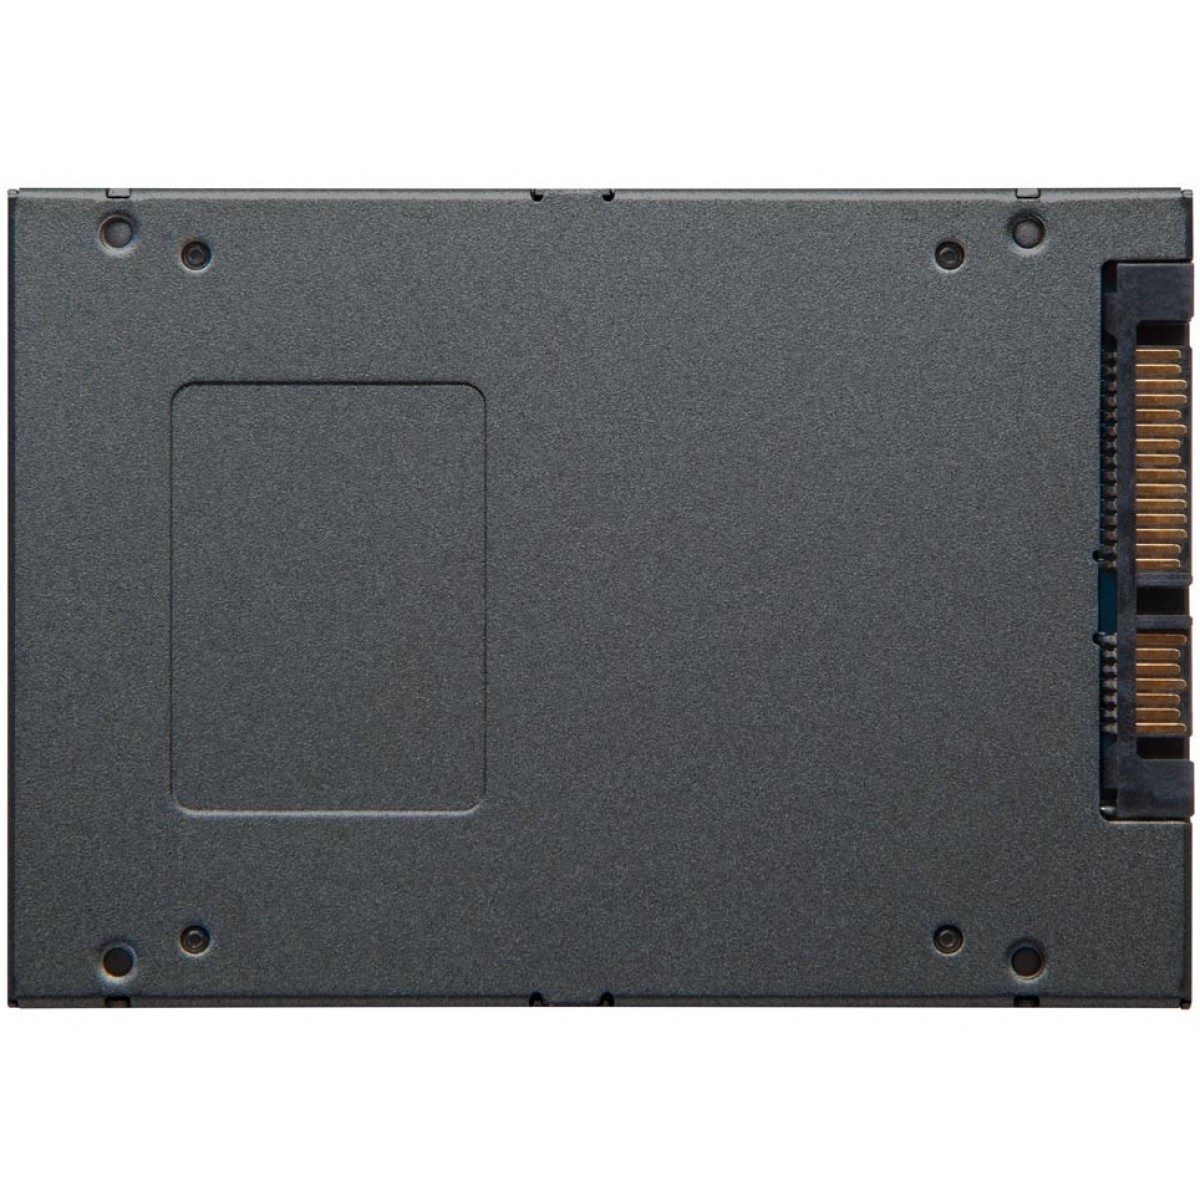 SSD Kingston A400, 120GB, Sata III, Leitura 500MBs Gravação 320MBs, SA400S37/120G